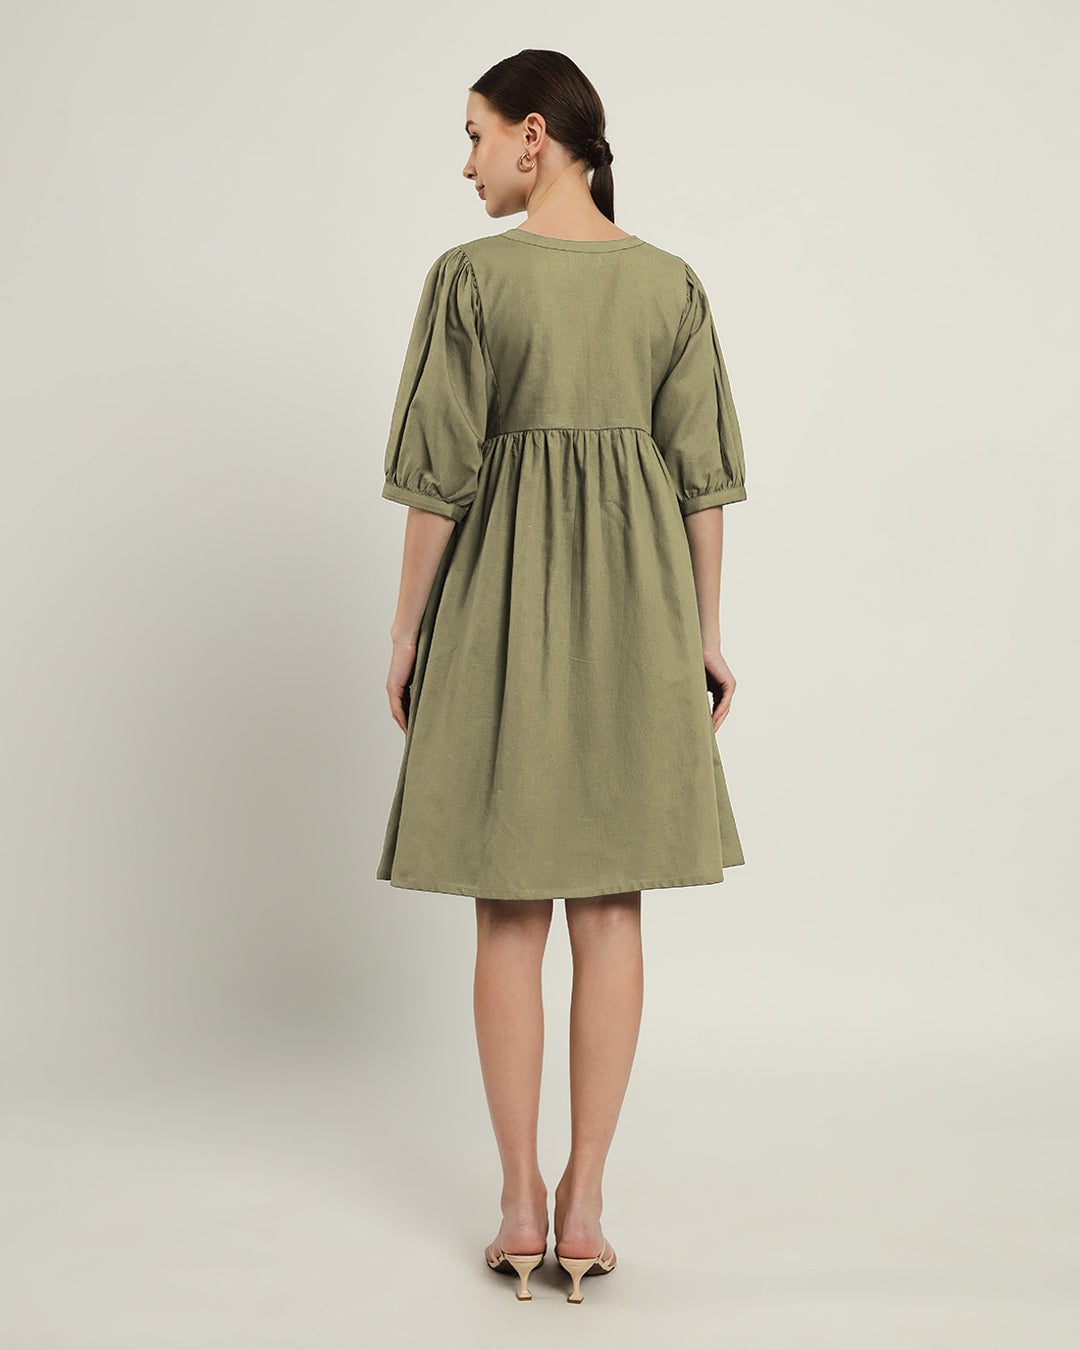 The Aira Daisy Olive Linen Dress